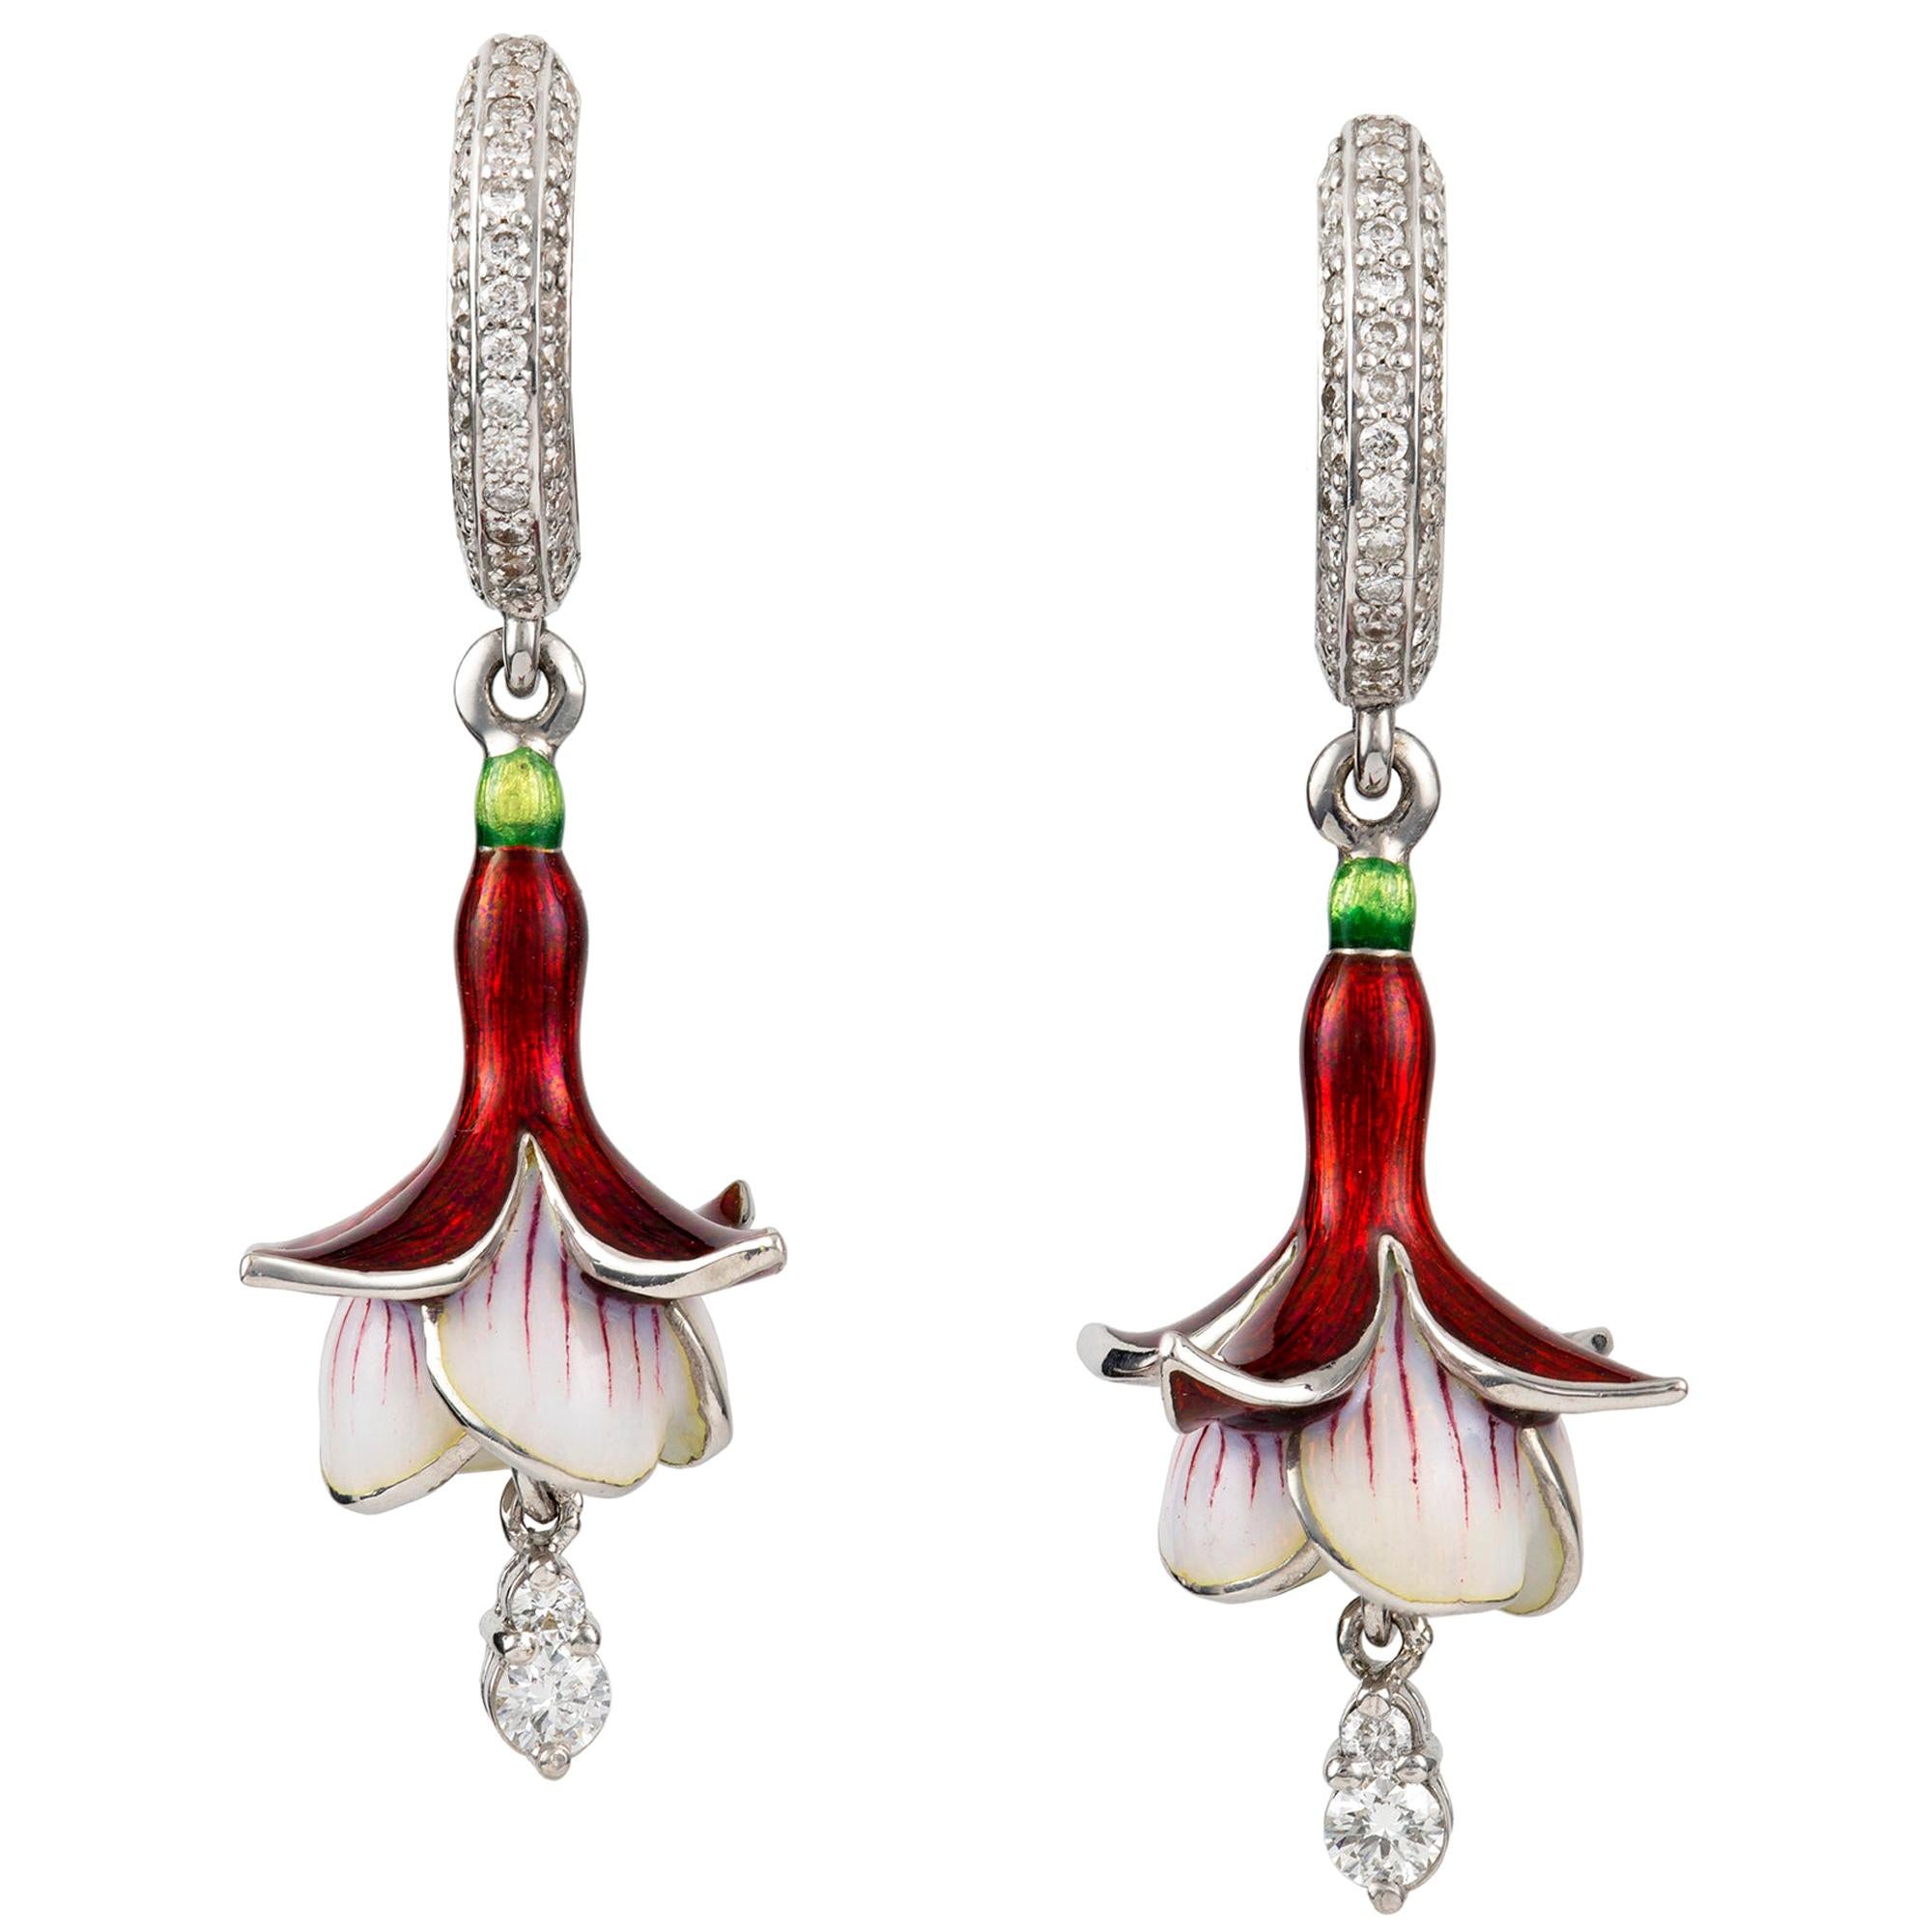 Pair of Fuchsia Earrings by Ilgiz F